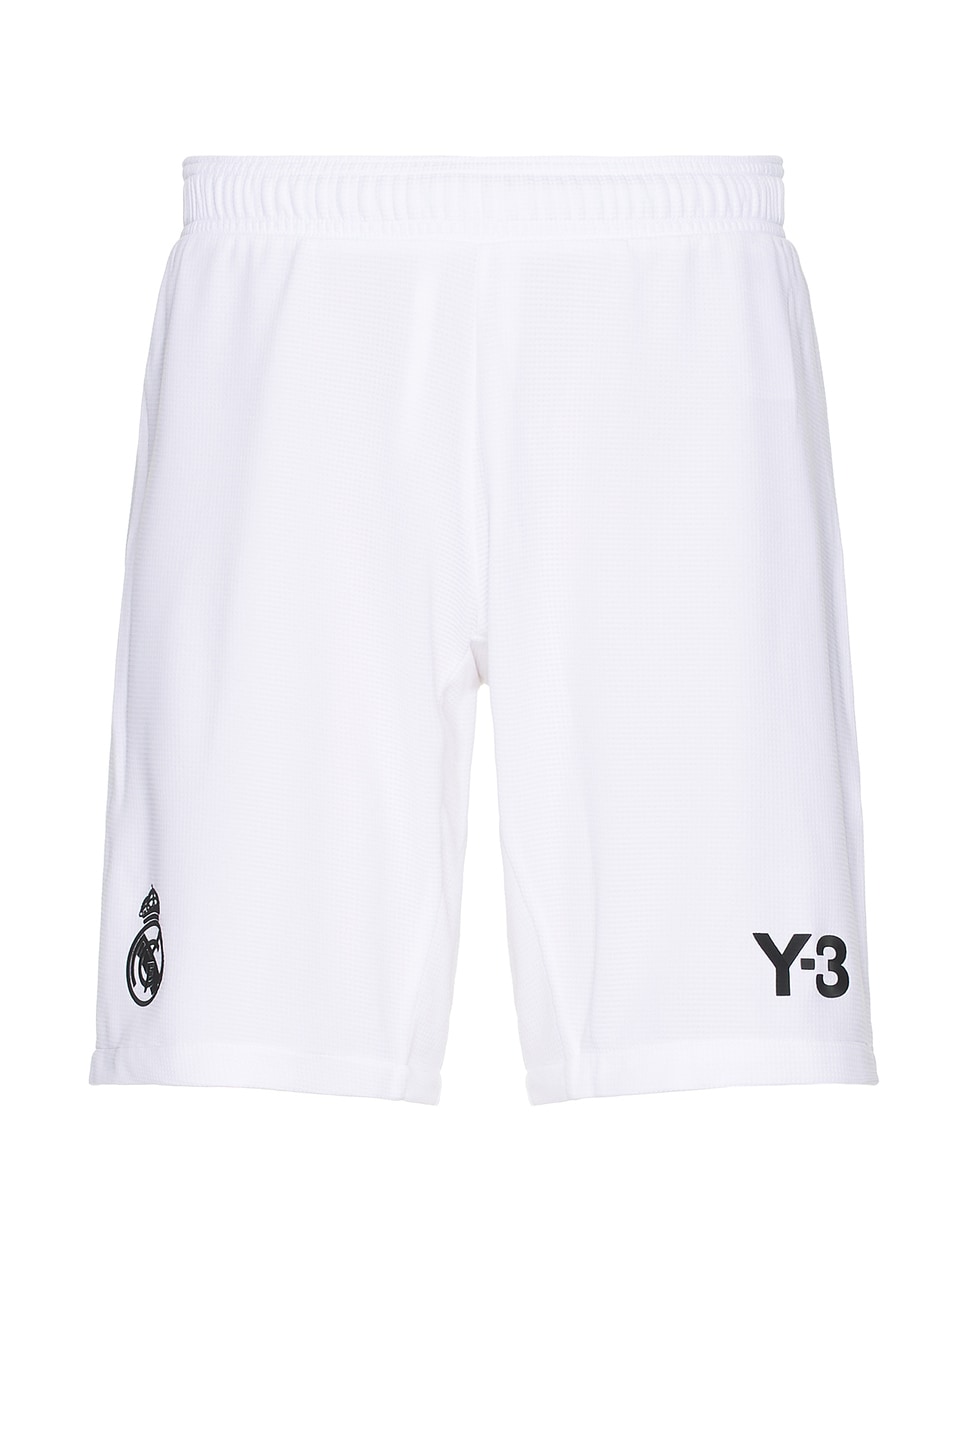 Image 1 of Y-3 Yohji Yamamoto x Real Madrid Pre Shorts in White